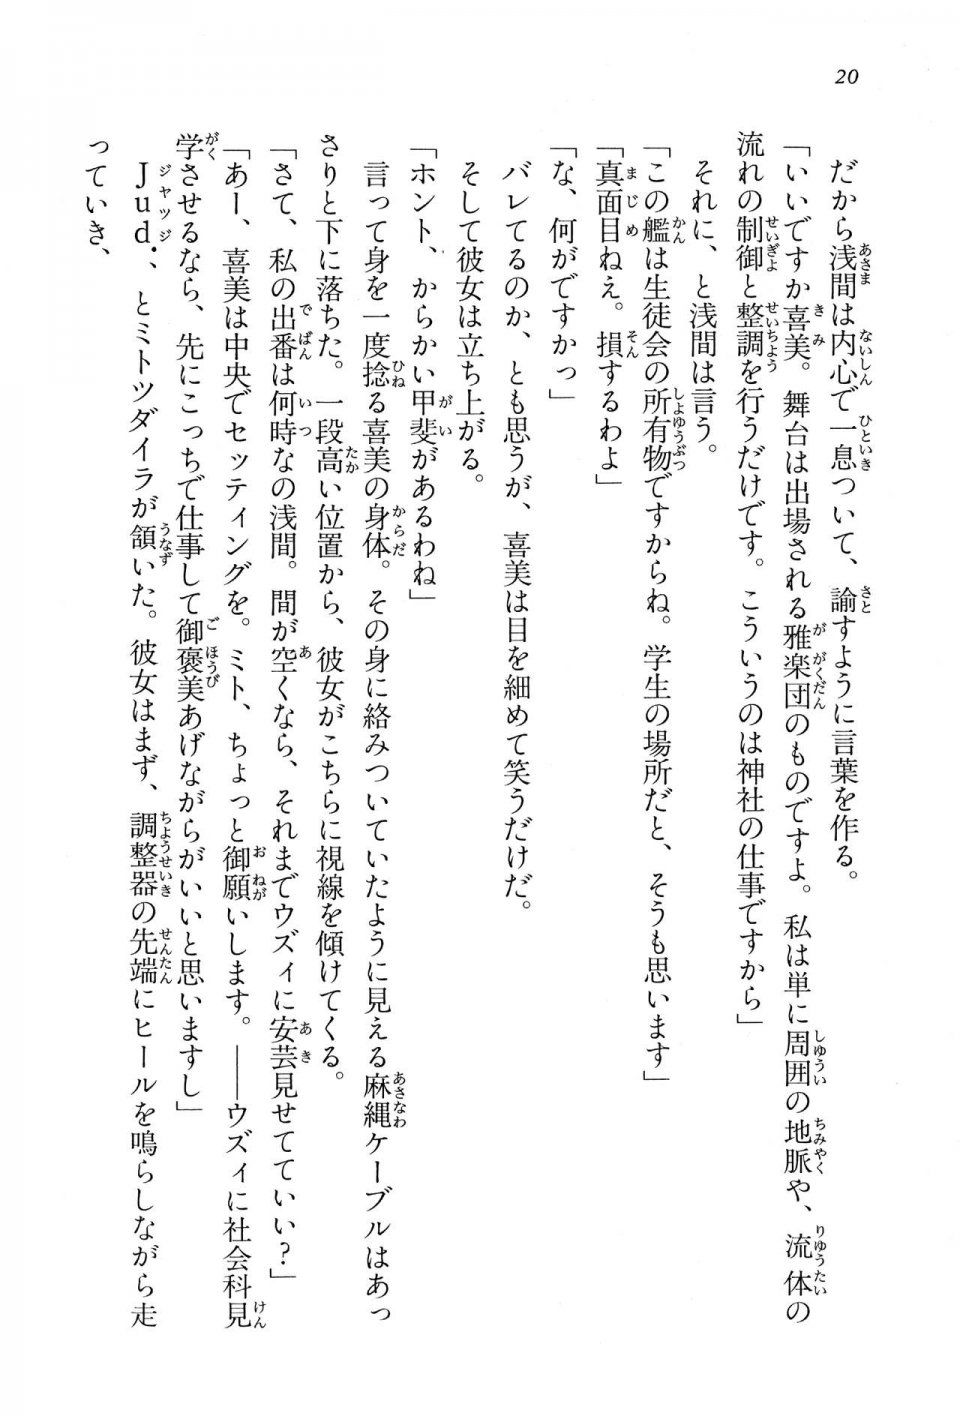 Kyoukai Senjou no Horizon BD Special Mininovel Vol 1(1A) - Photo #24